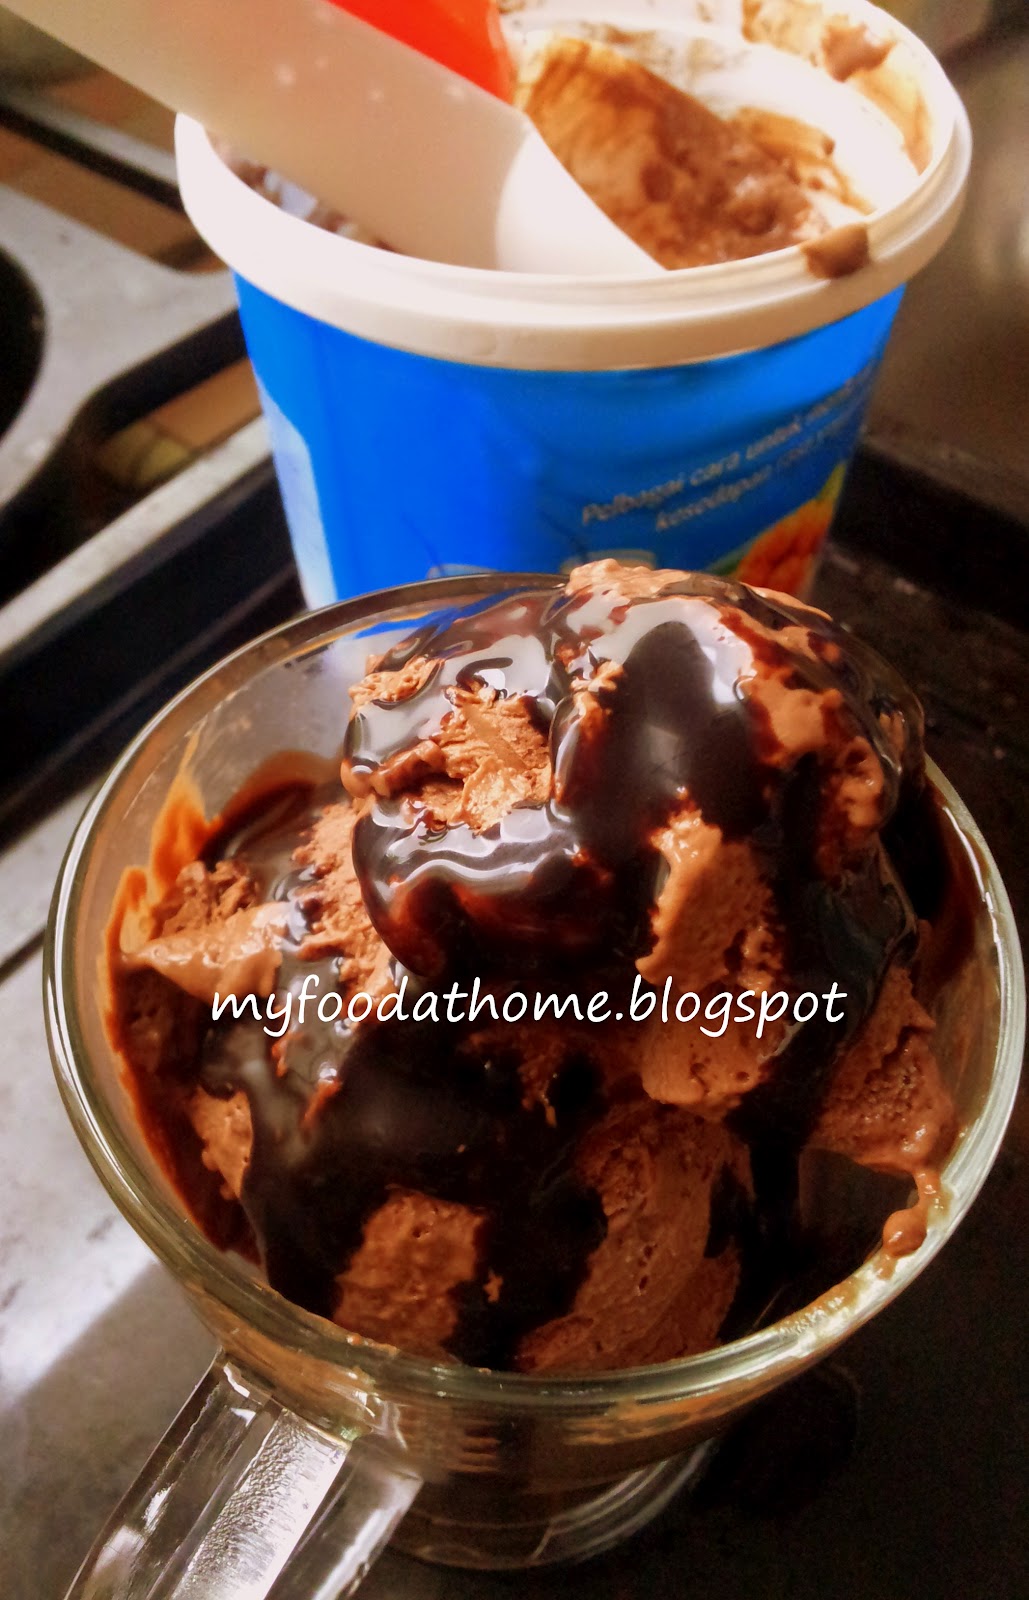 Food at Home: Chocolate Ice Cream